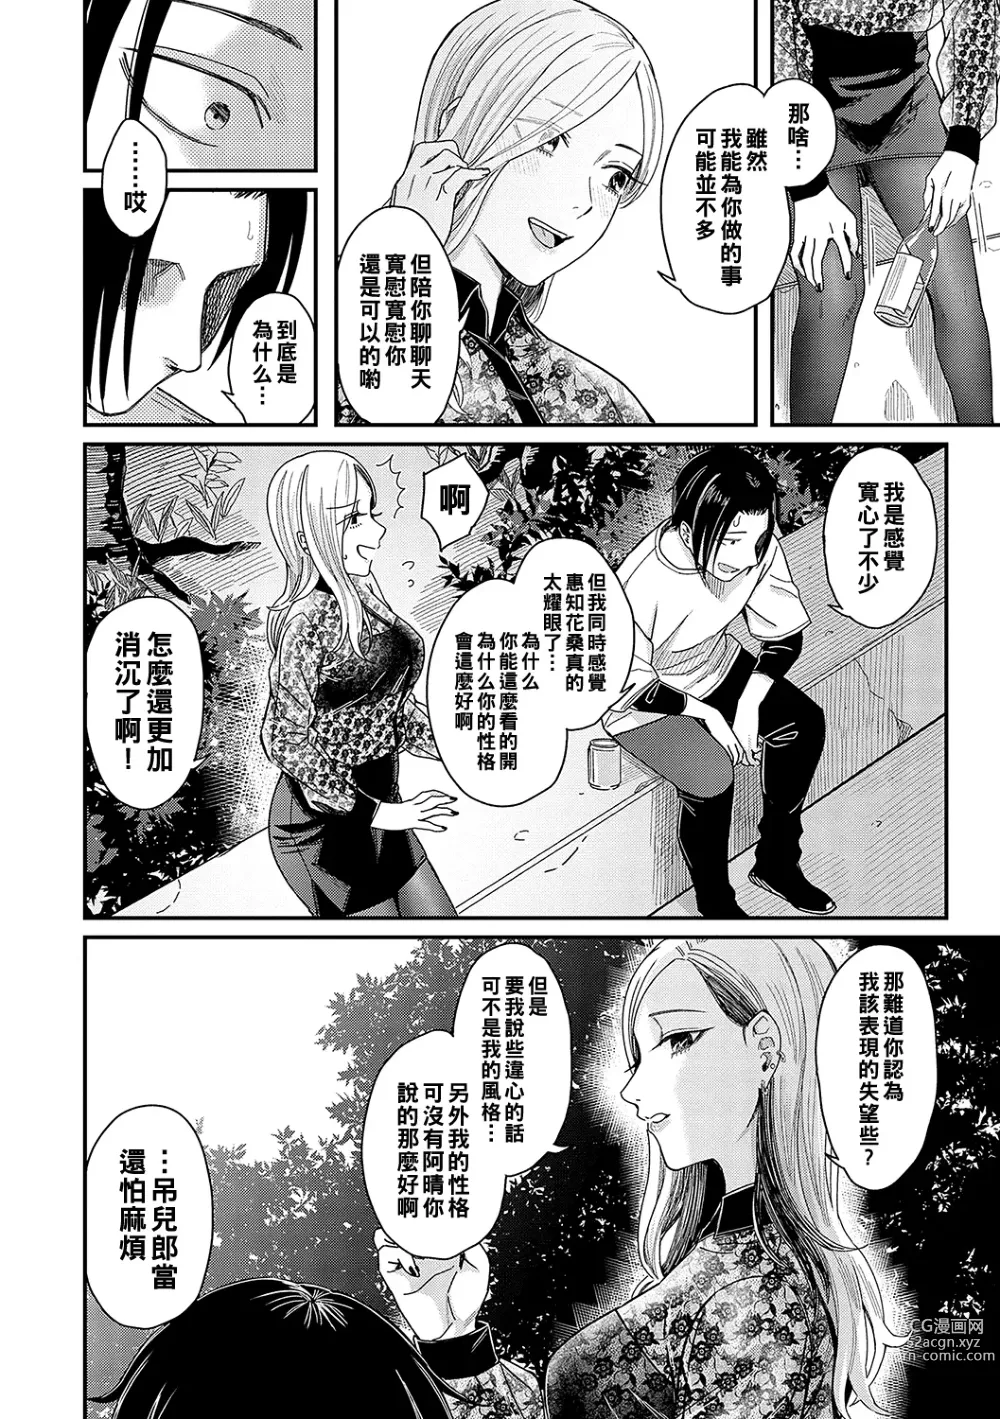 Page 6 of manga Zankyou  to Spotlight - Reverberation and spotlight